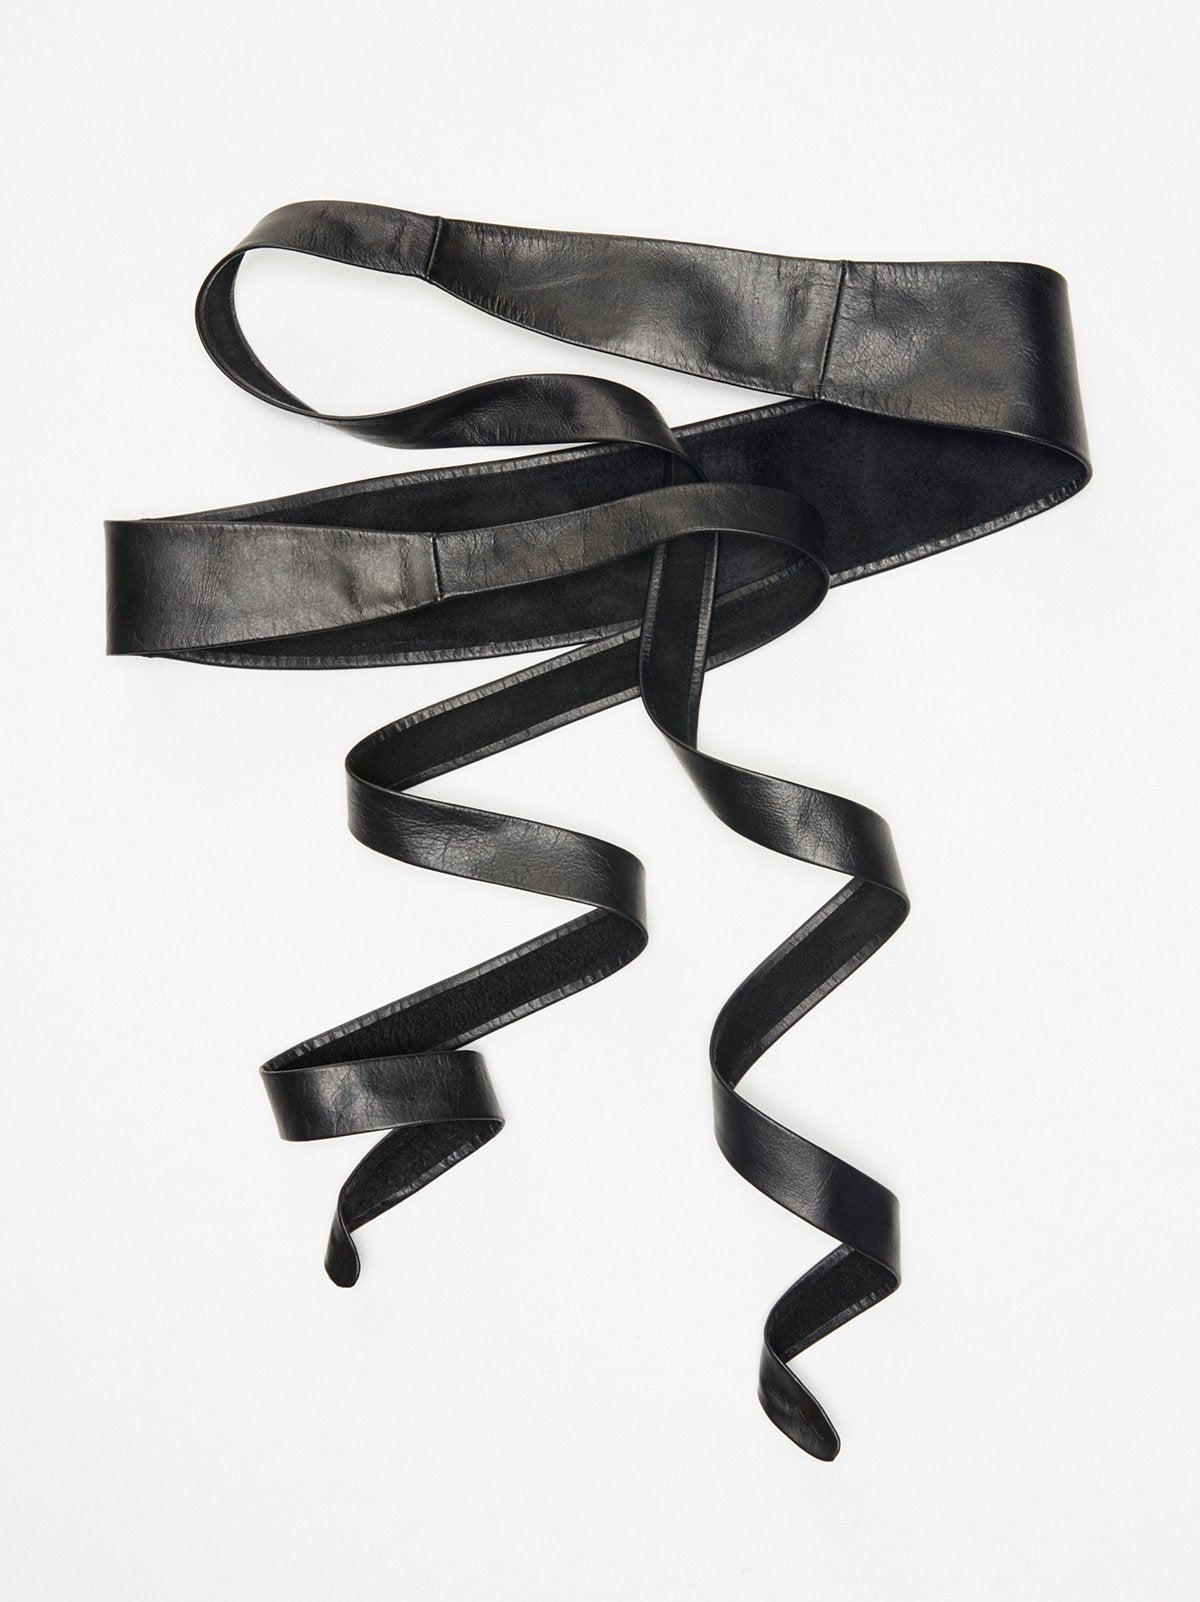 Wrap Leather Belt - Black